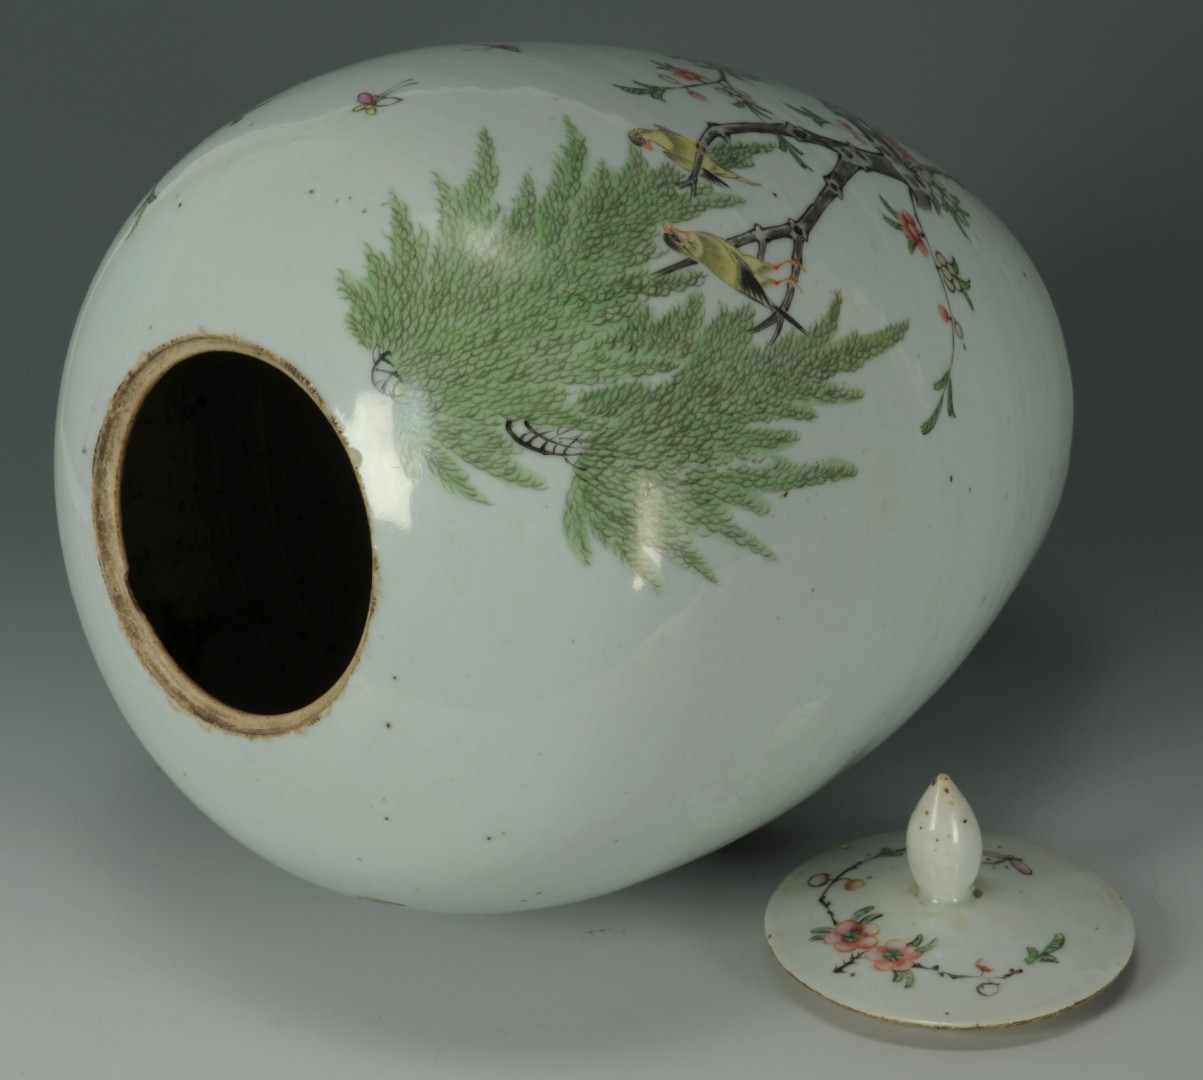 Lot 482: Chinese Famille Rose Jar & Temple Vase